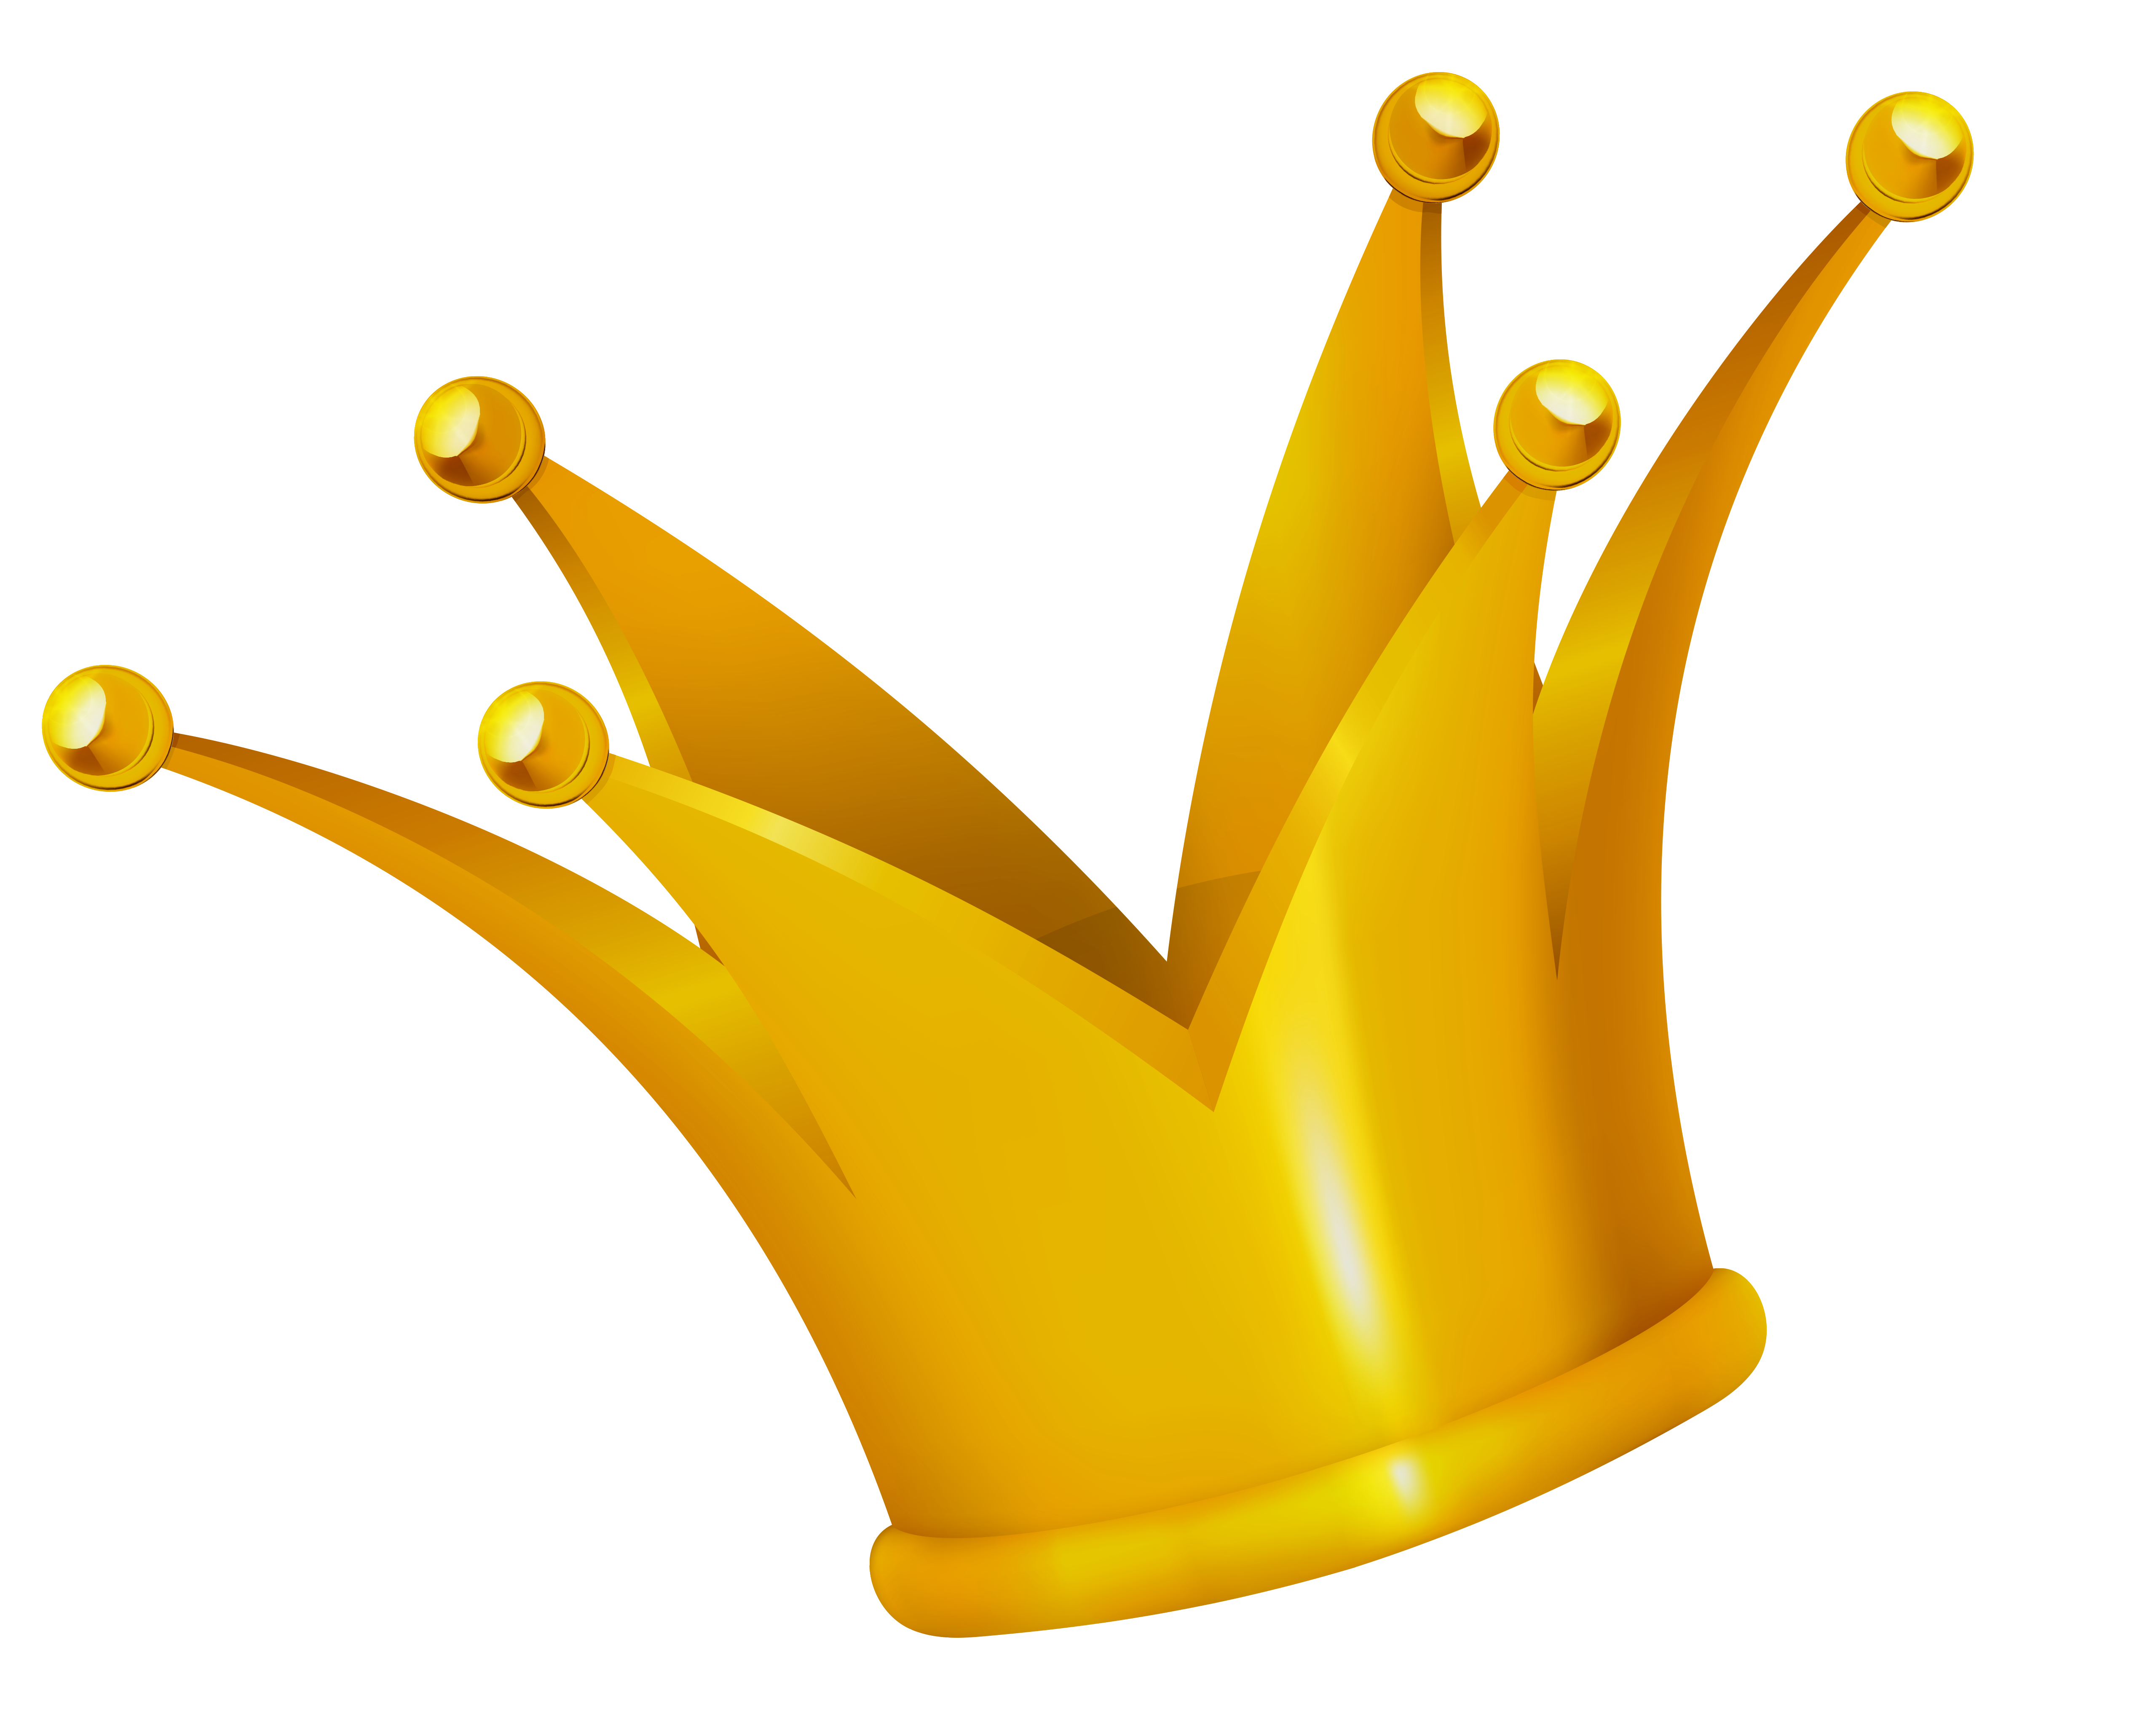 Crown Clipart; Crown Clipart 